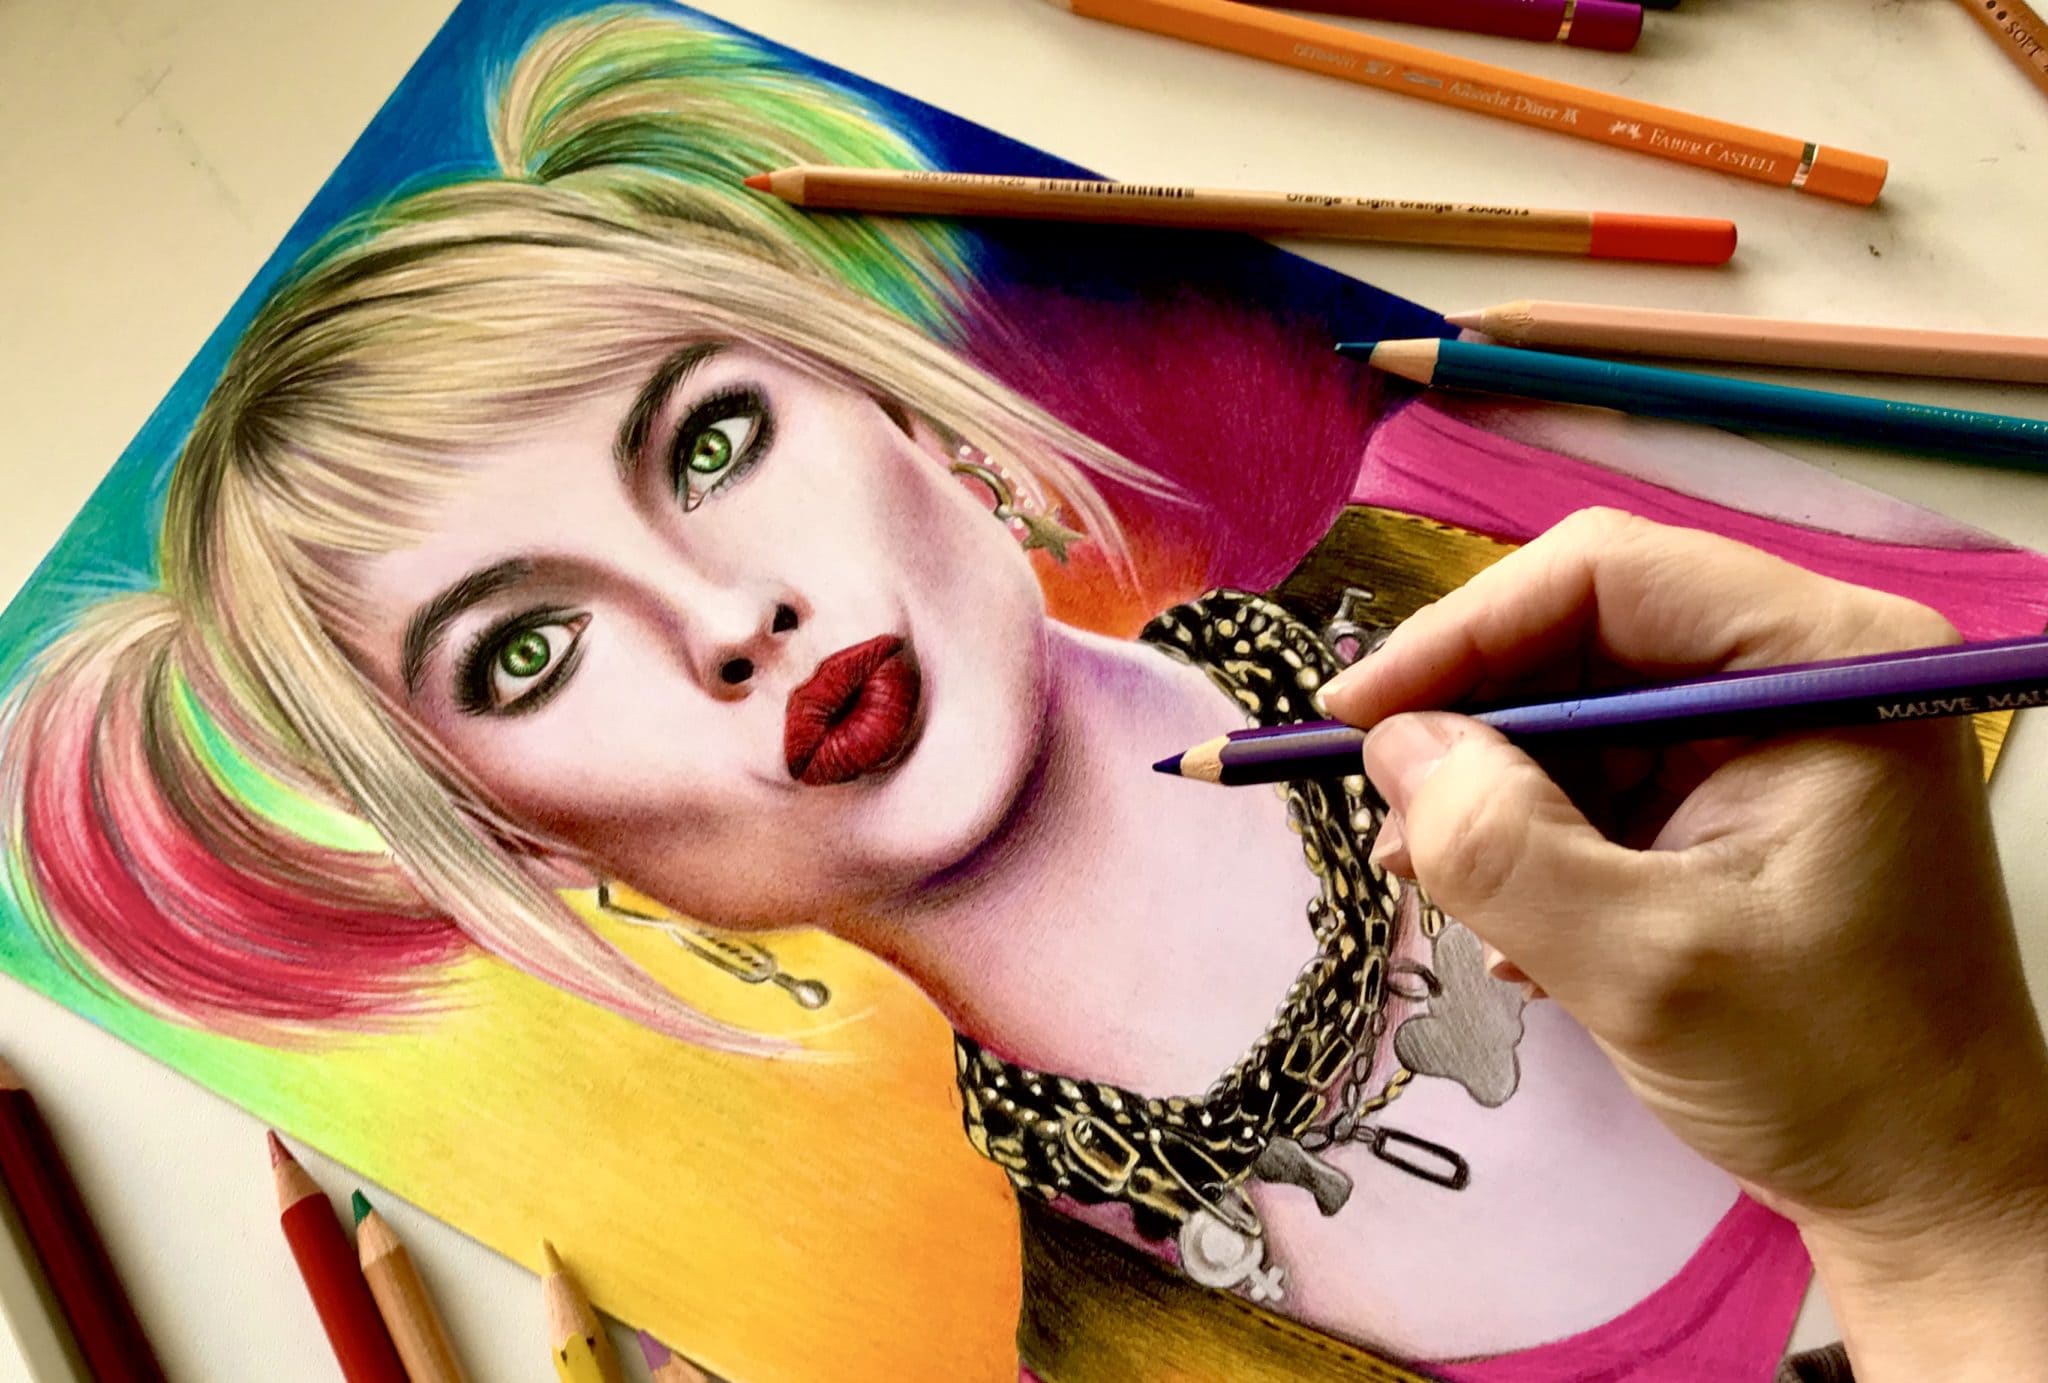 Harley Quinn Drawings for Sale - Fine Art America